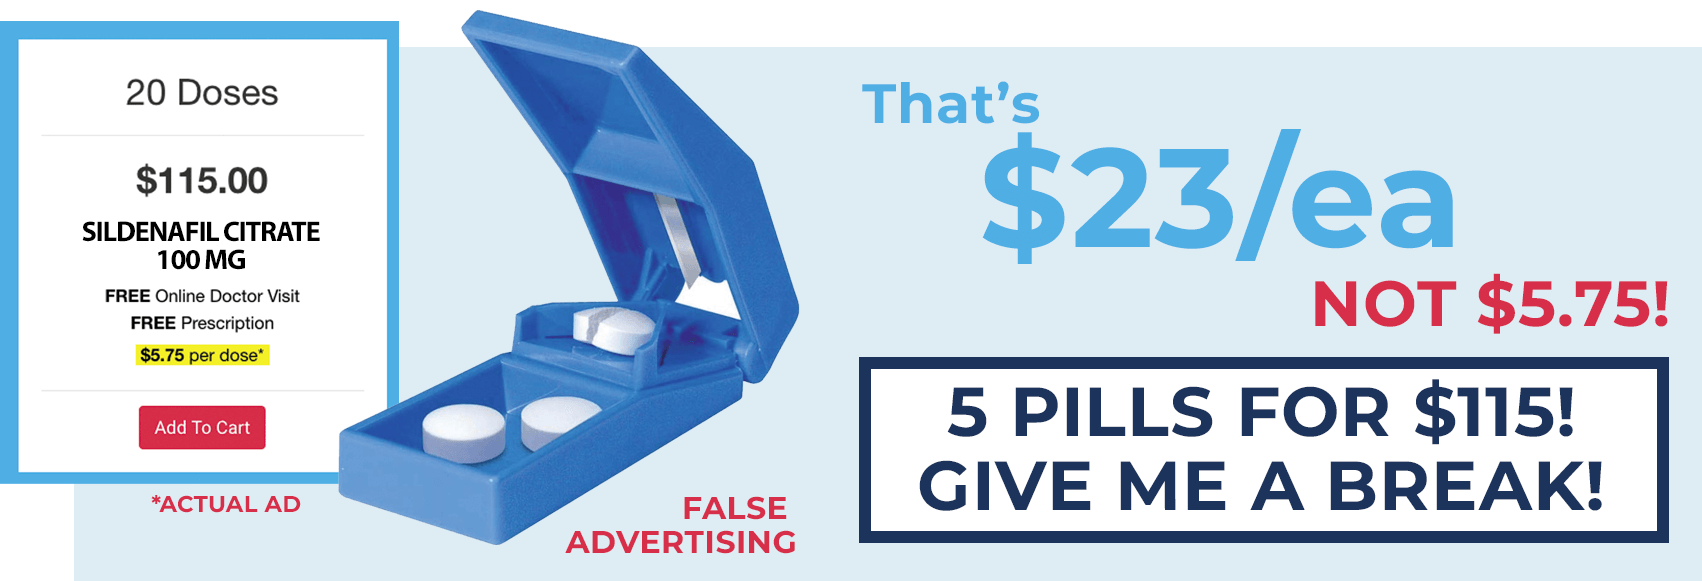 Fales Advertising: 5 pills for 115 dollars